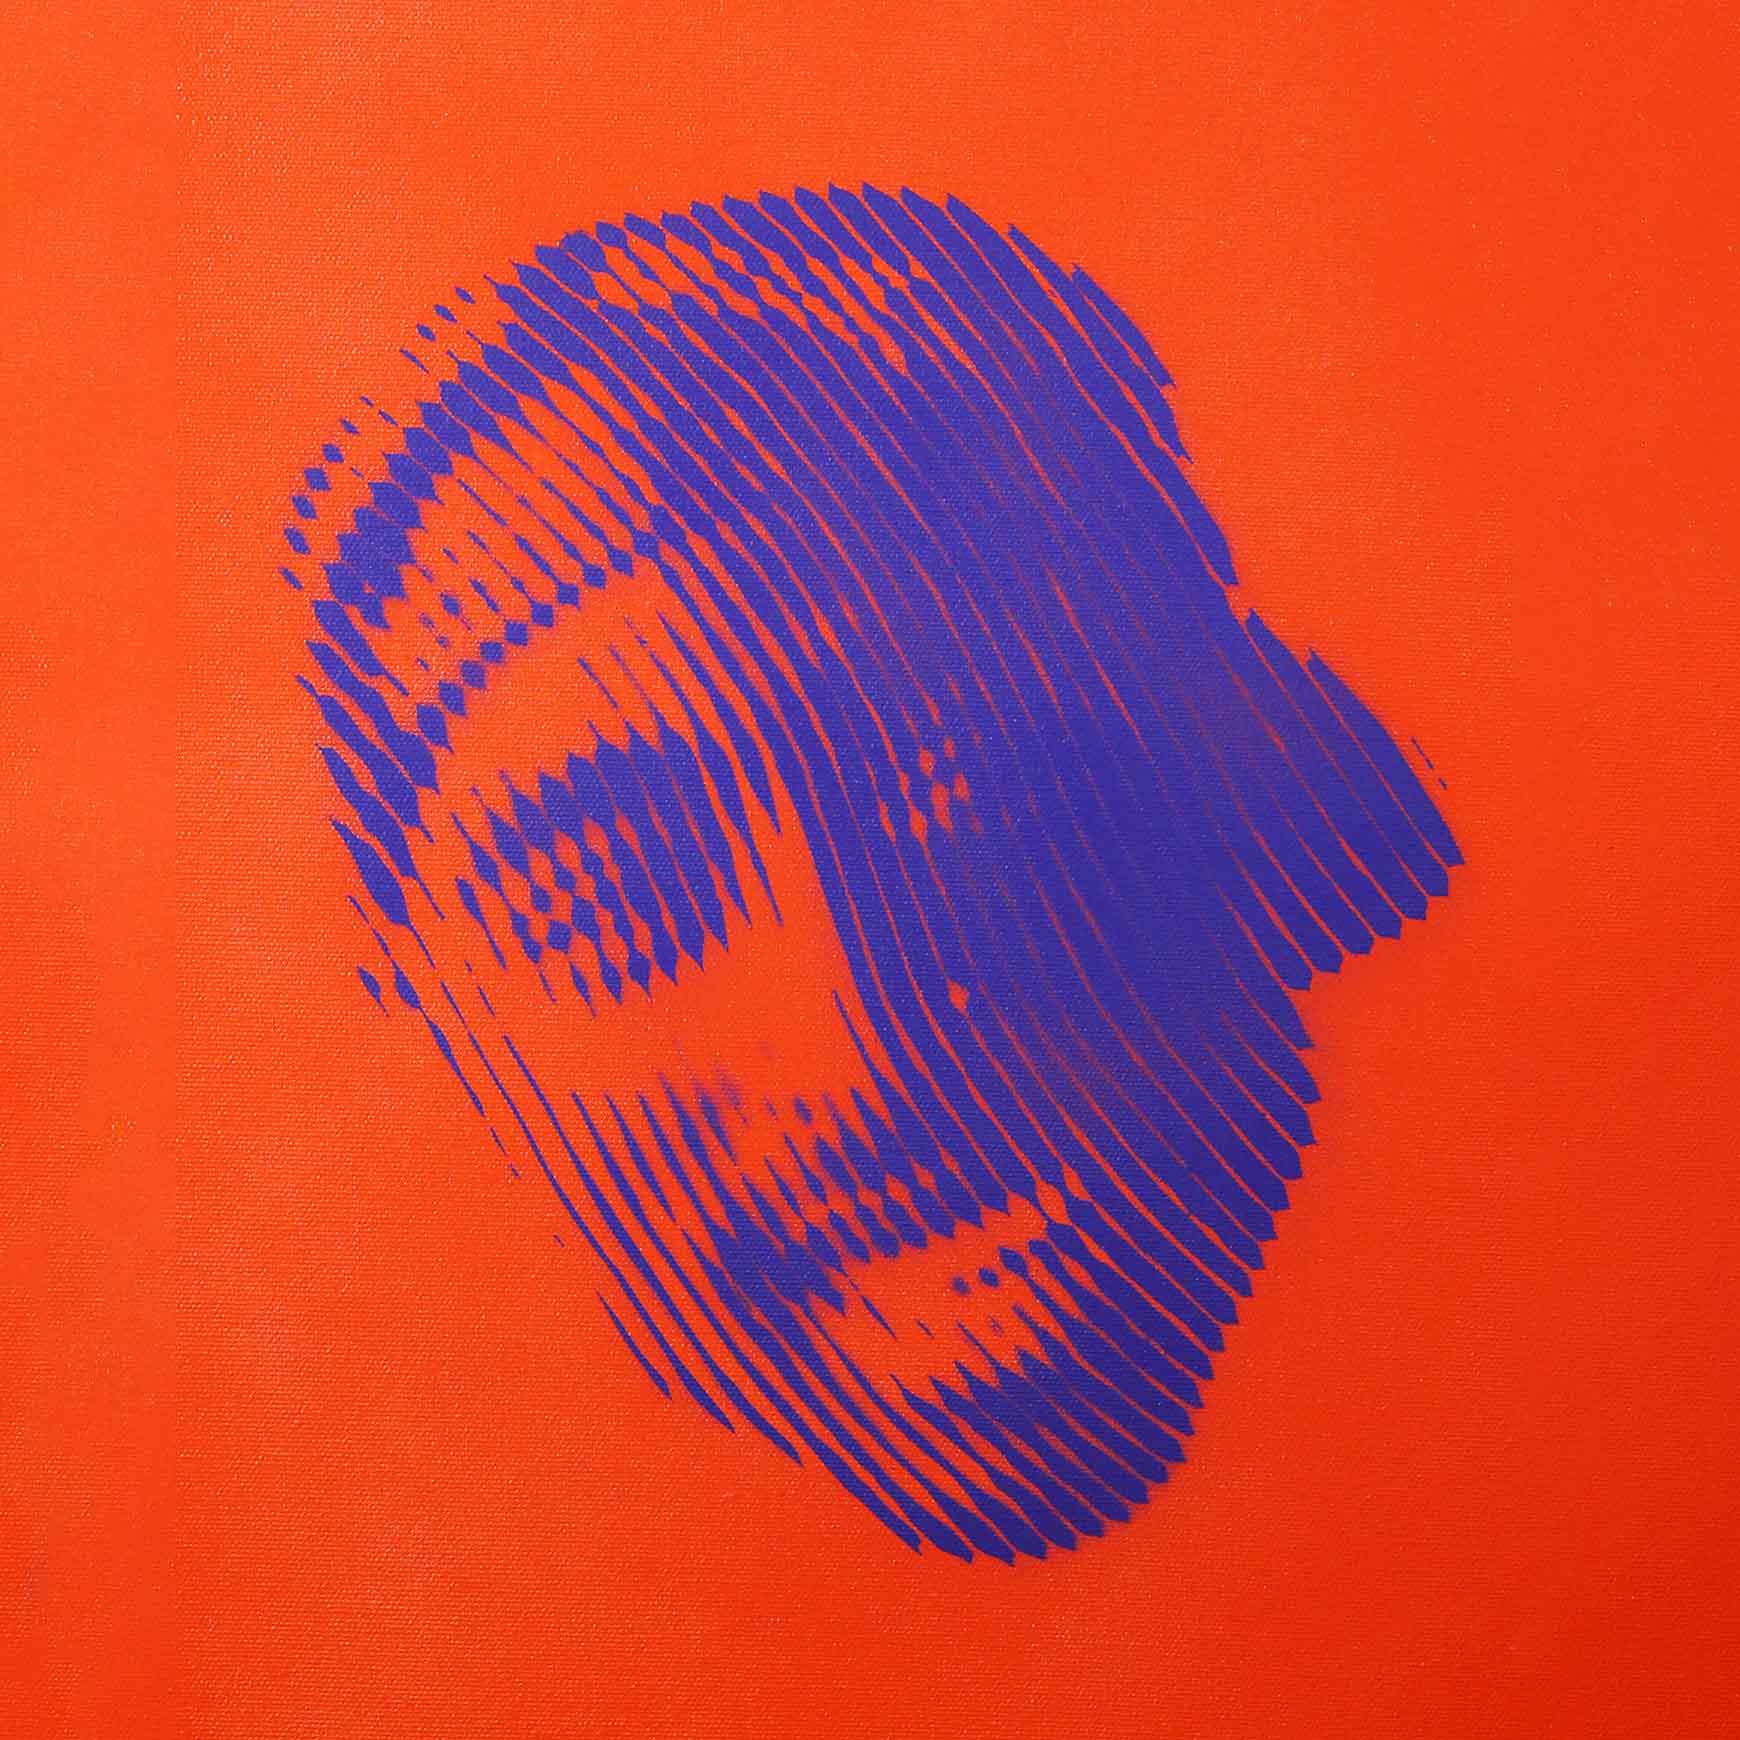 Tupac halftone stencil canvas painting